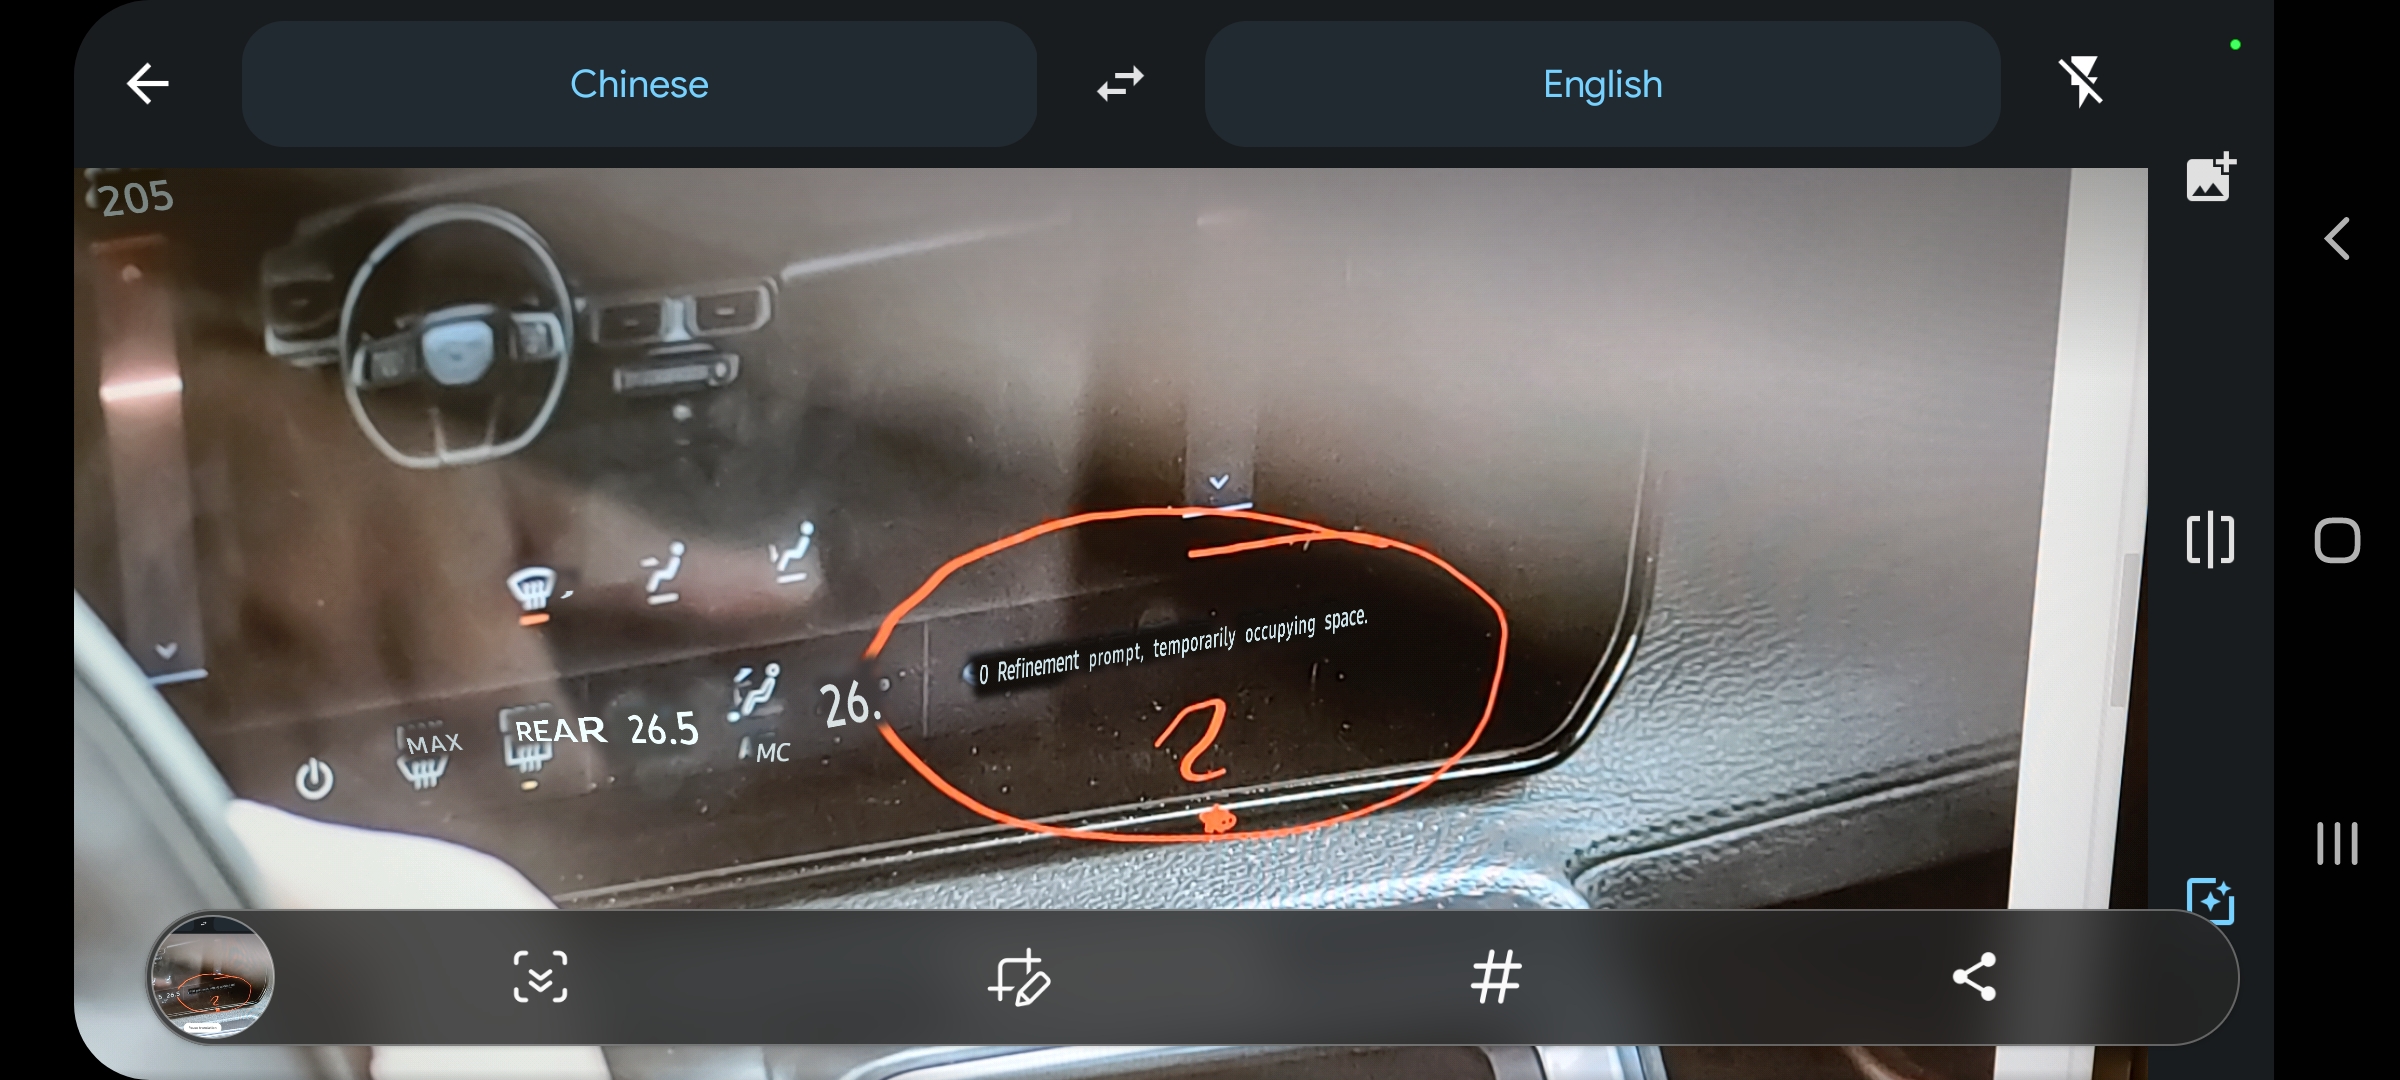 S650 Mustang S650 Mustang INTERIOR First Look Spyshots! + More Exterior Shots Screenshot_20220411-112407_Translate